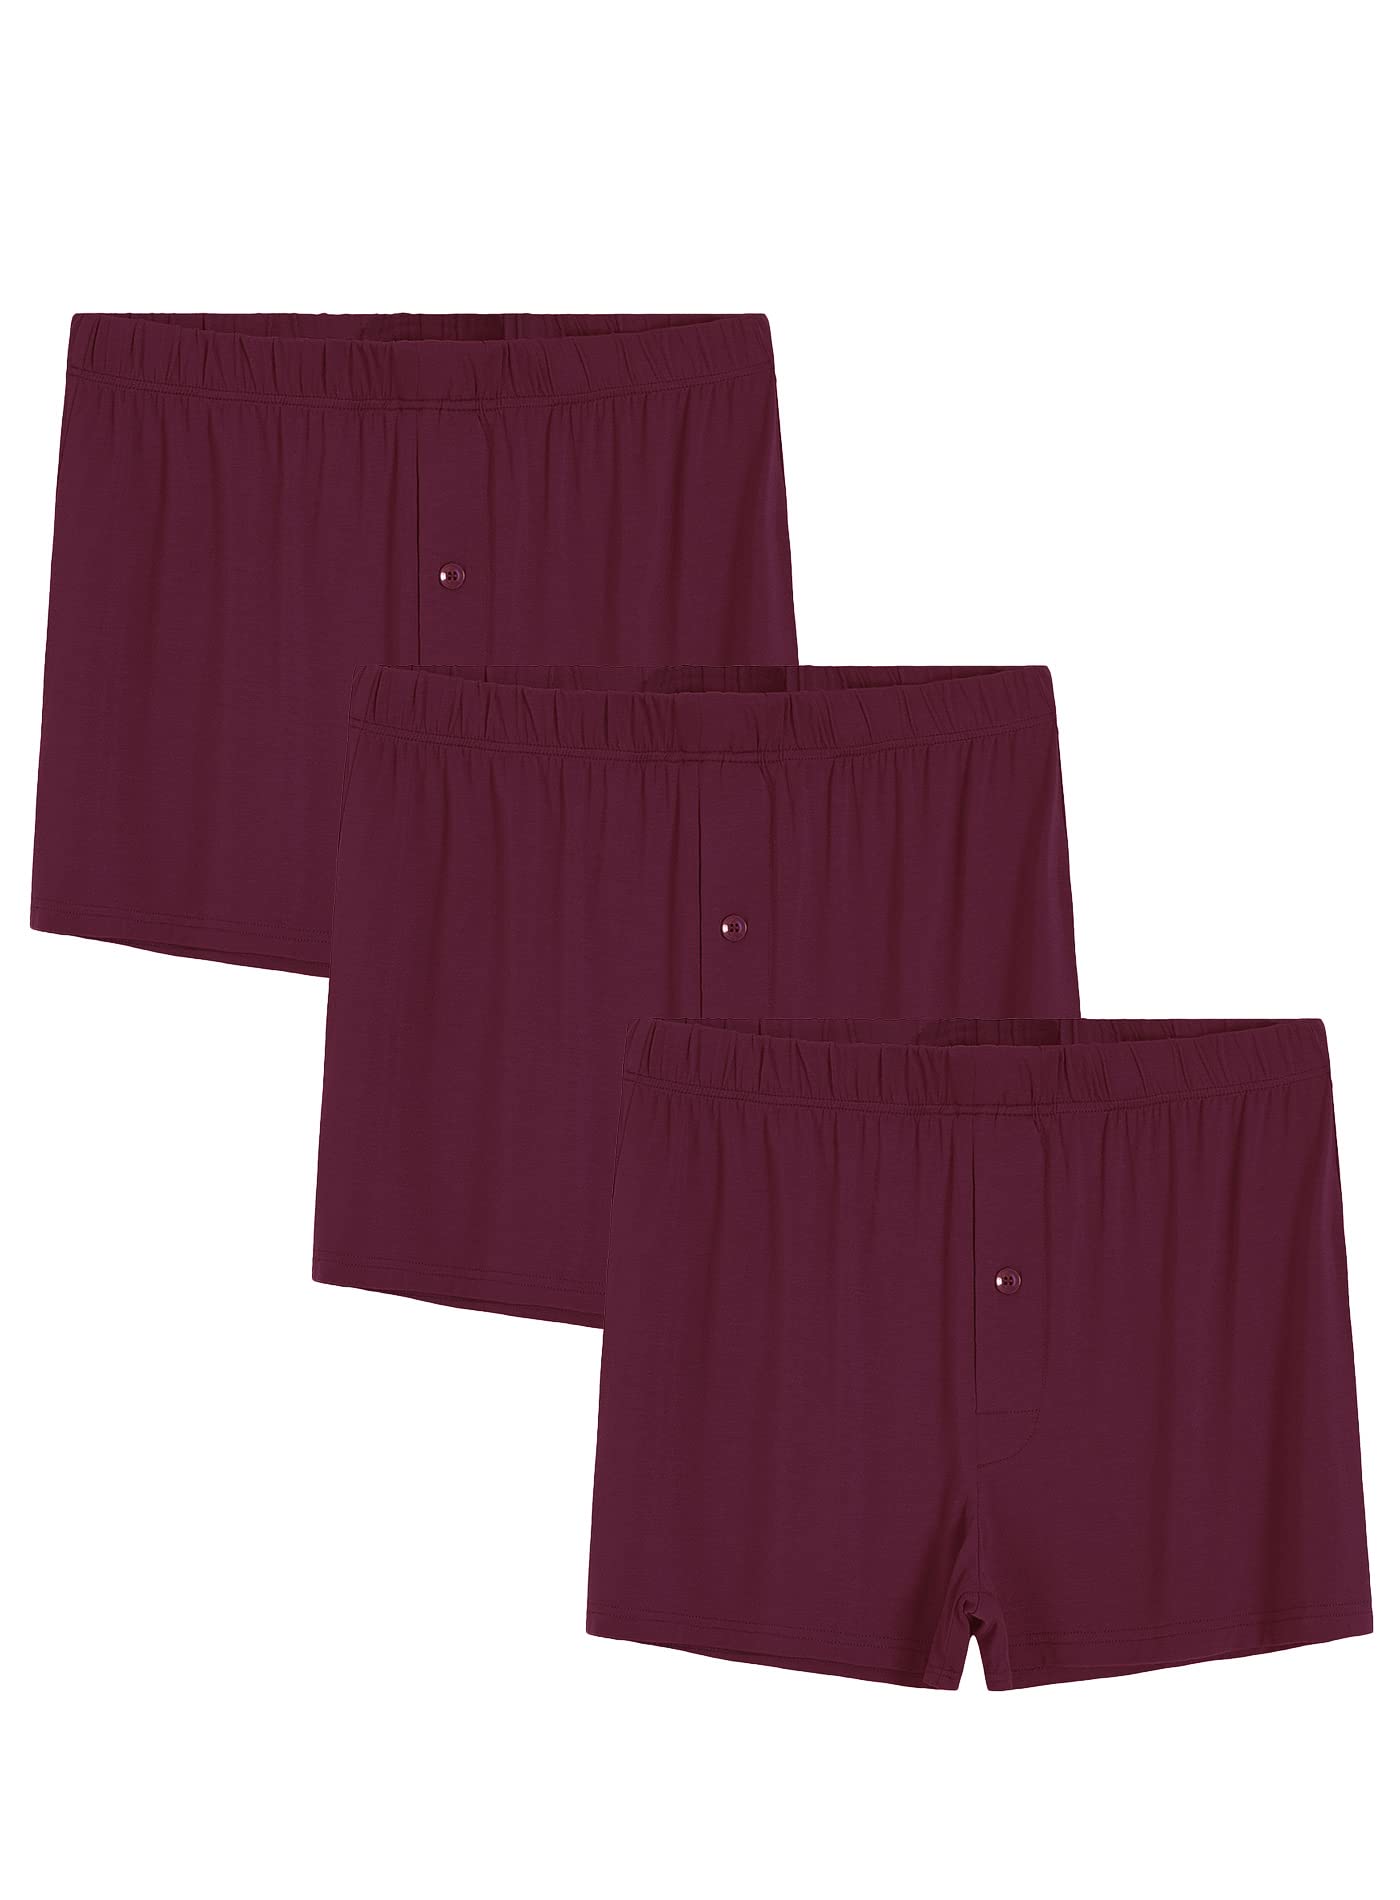 Men's Bamboo Viscose Underwear Boxer Shorts Trunk Briefs 3 Pack - Latuza